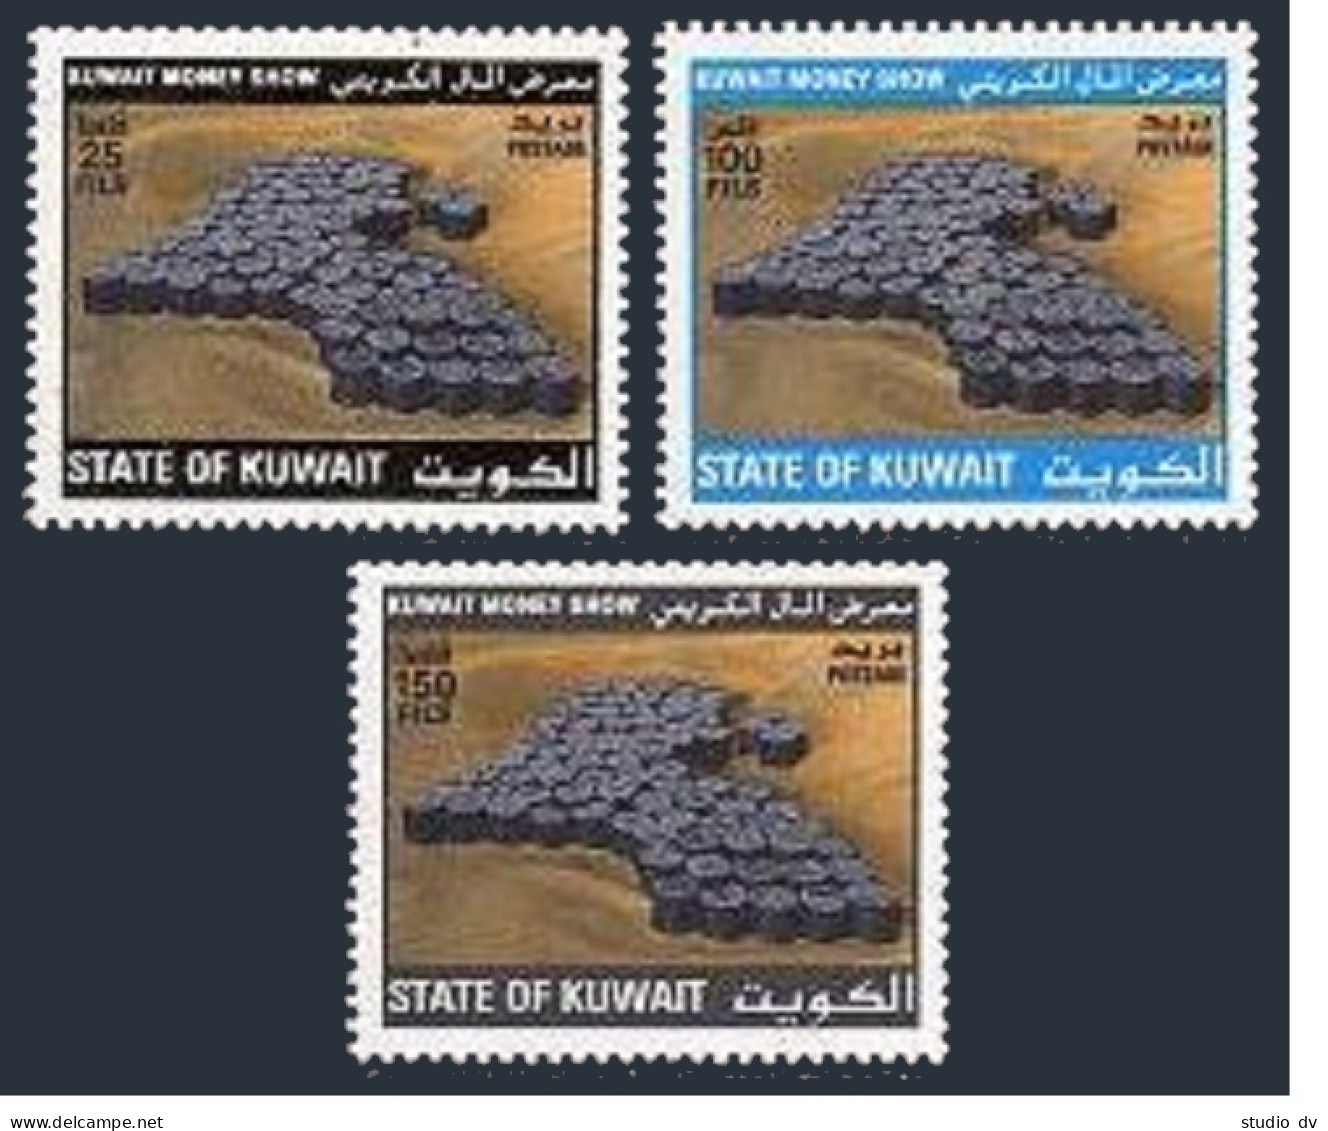 Kuwait 1318-1320, MNH. Michel 1435-1437. Kuwait Money Show, 1996. - Kuwait